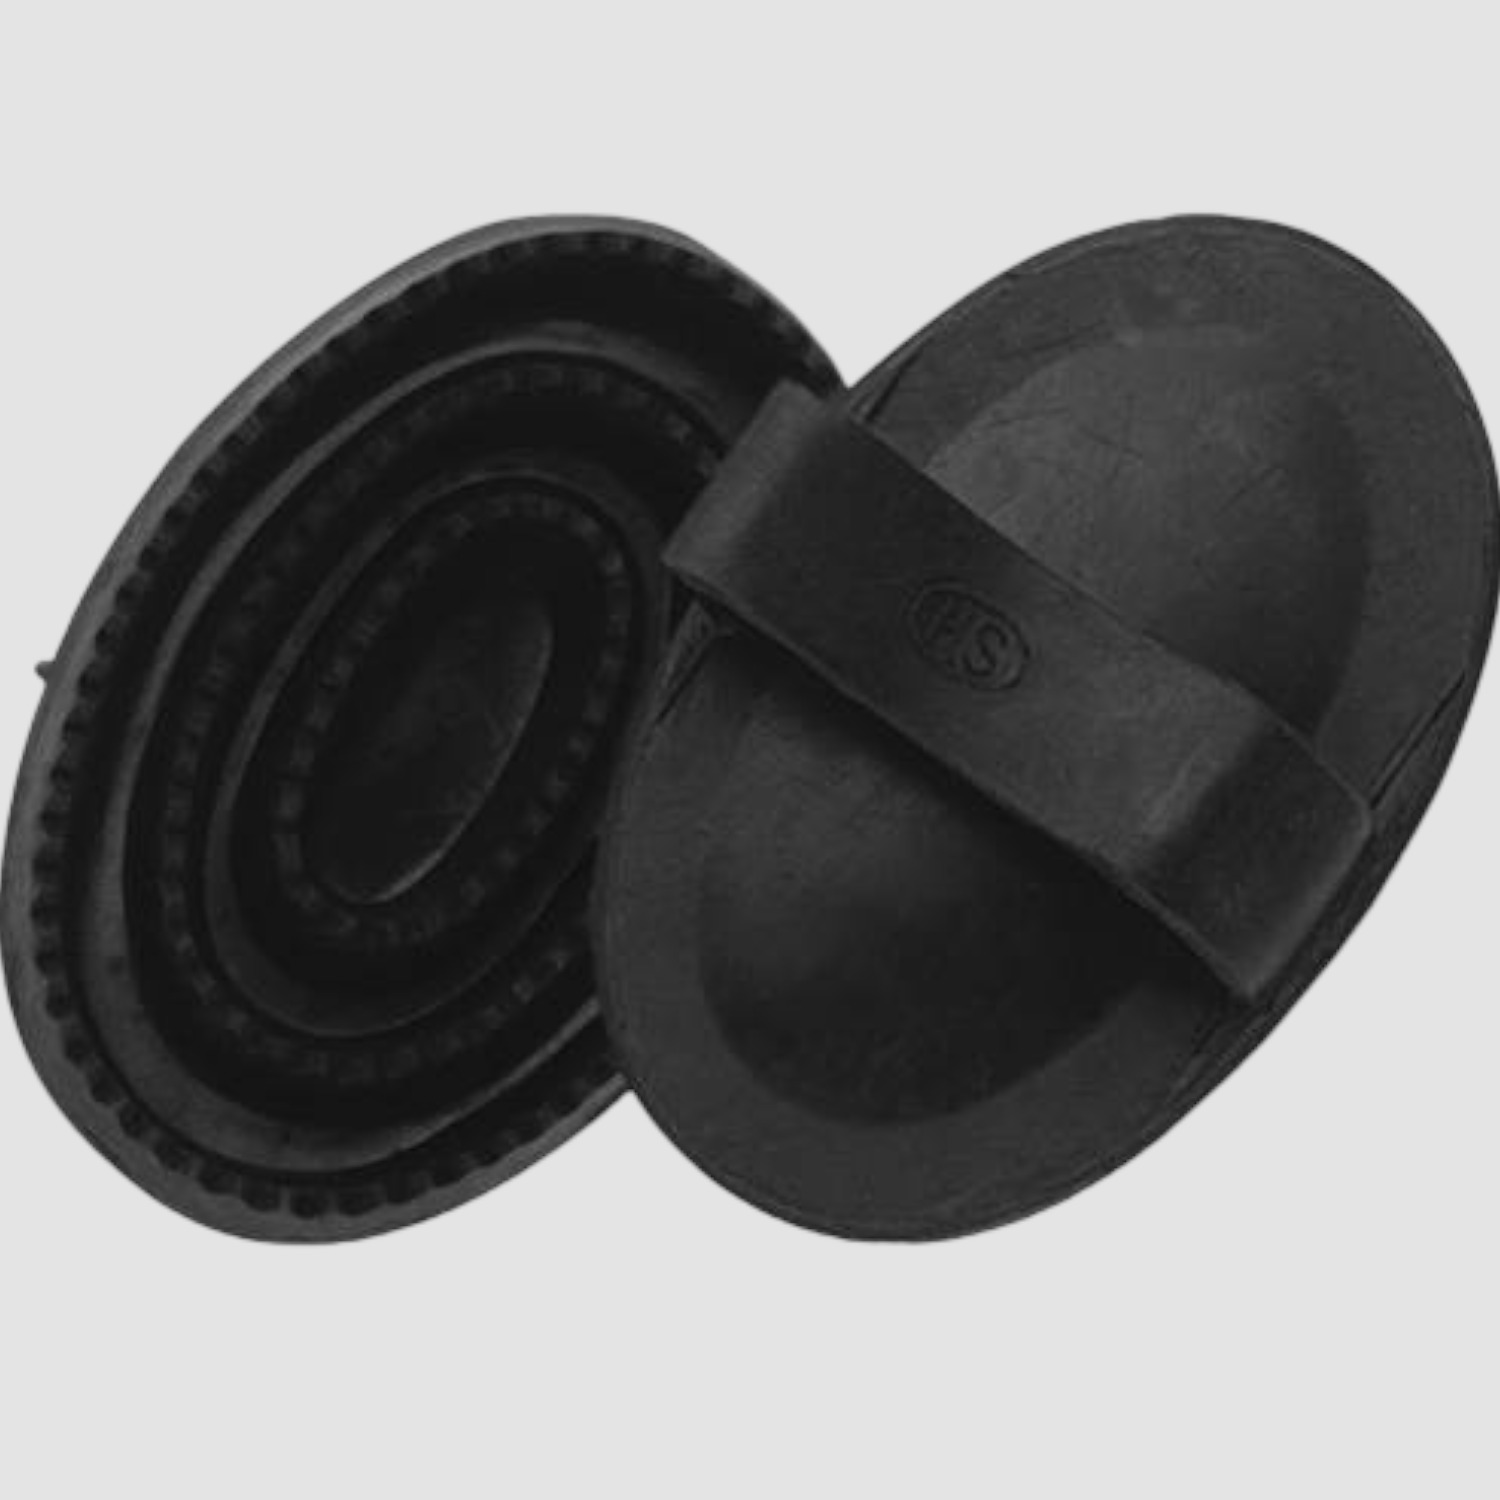 Sprenger Gummistriegel - schwarz, Maße 165 x 110 mm